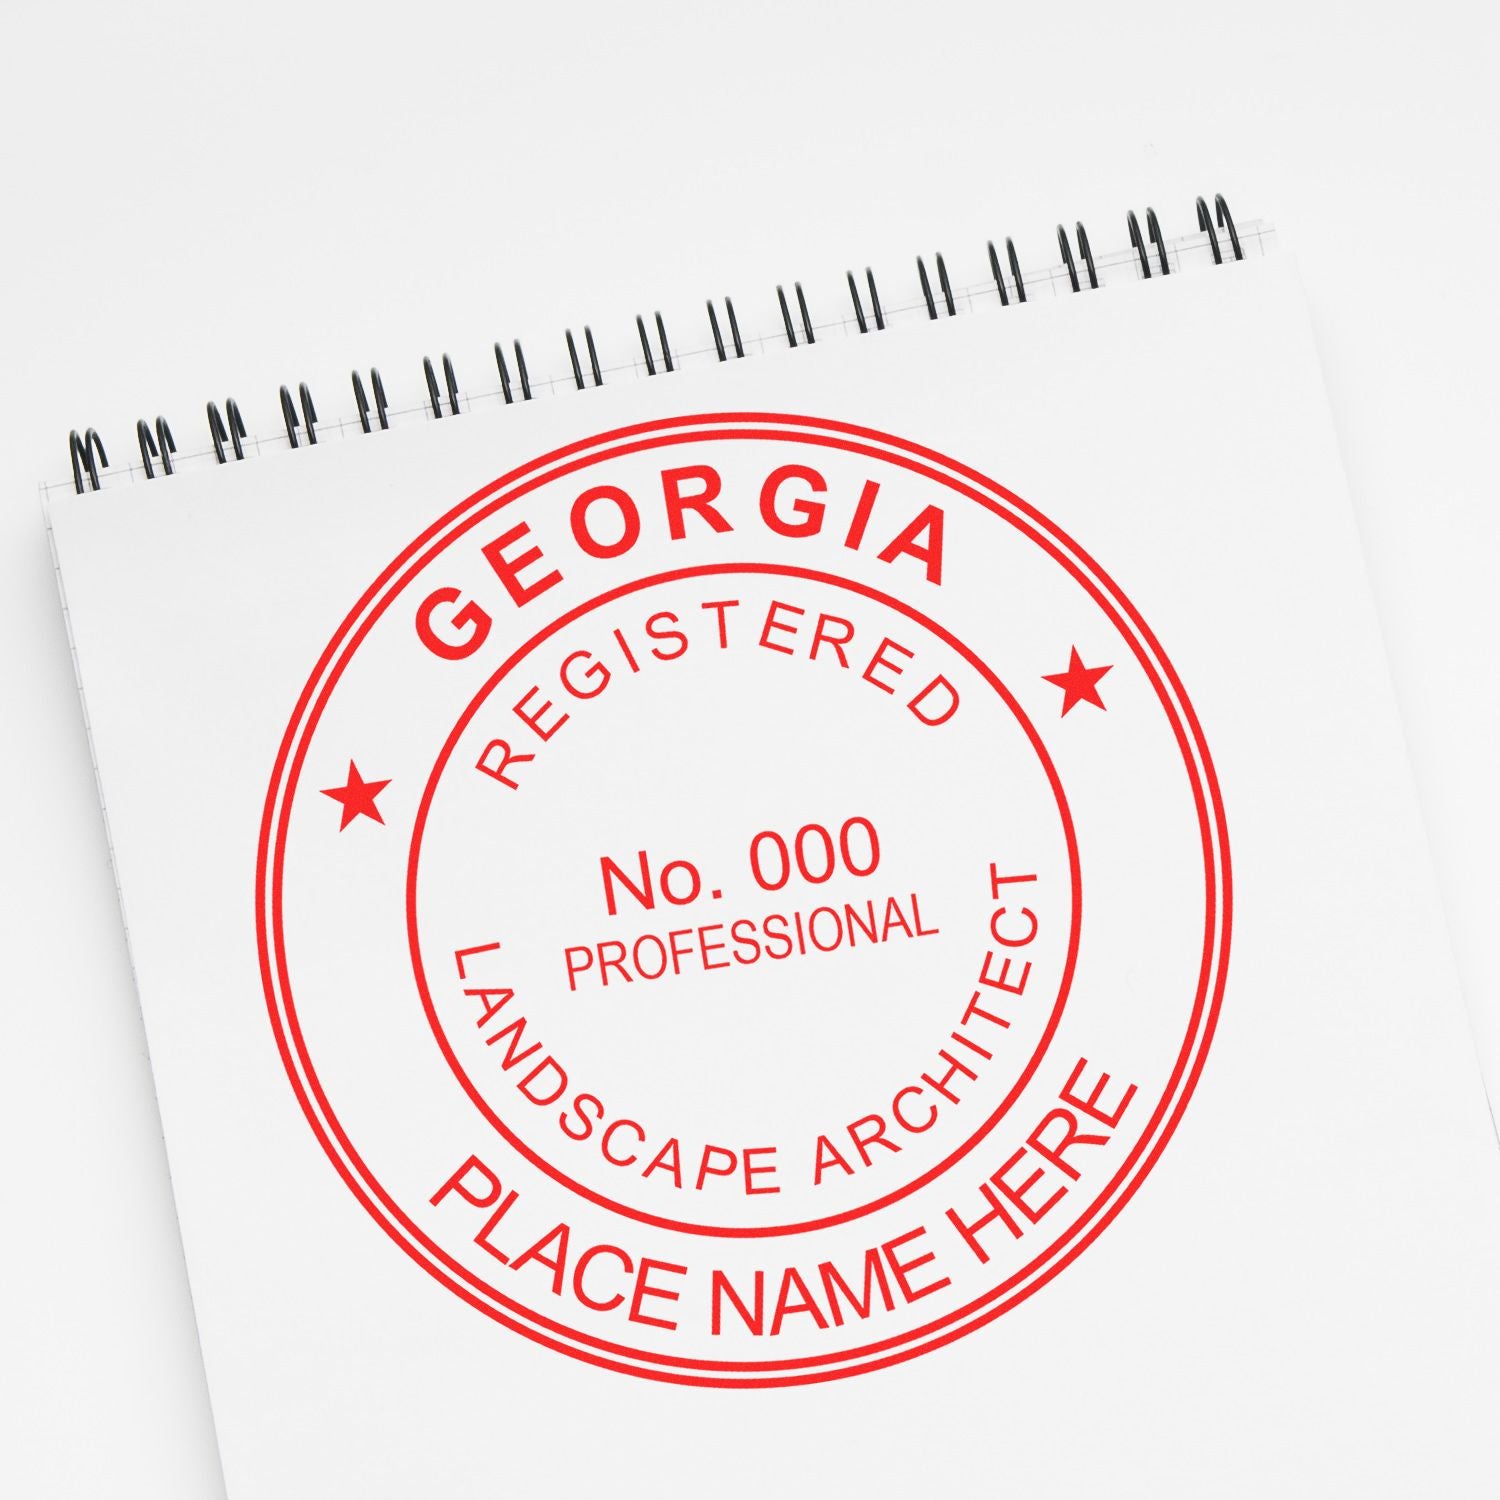 Georgia Landscape Architects: Secure Your Success with the Georgia Landscape Architect Seal Feature Image